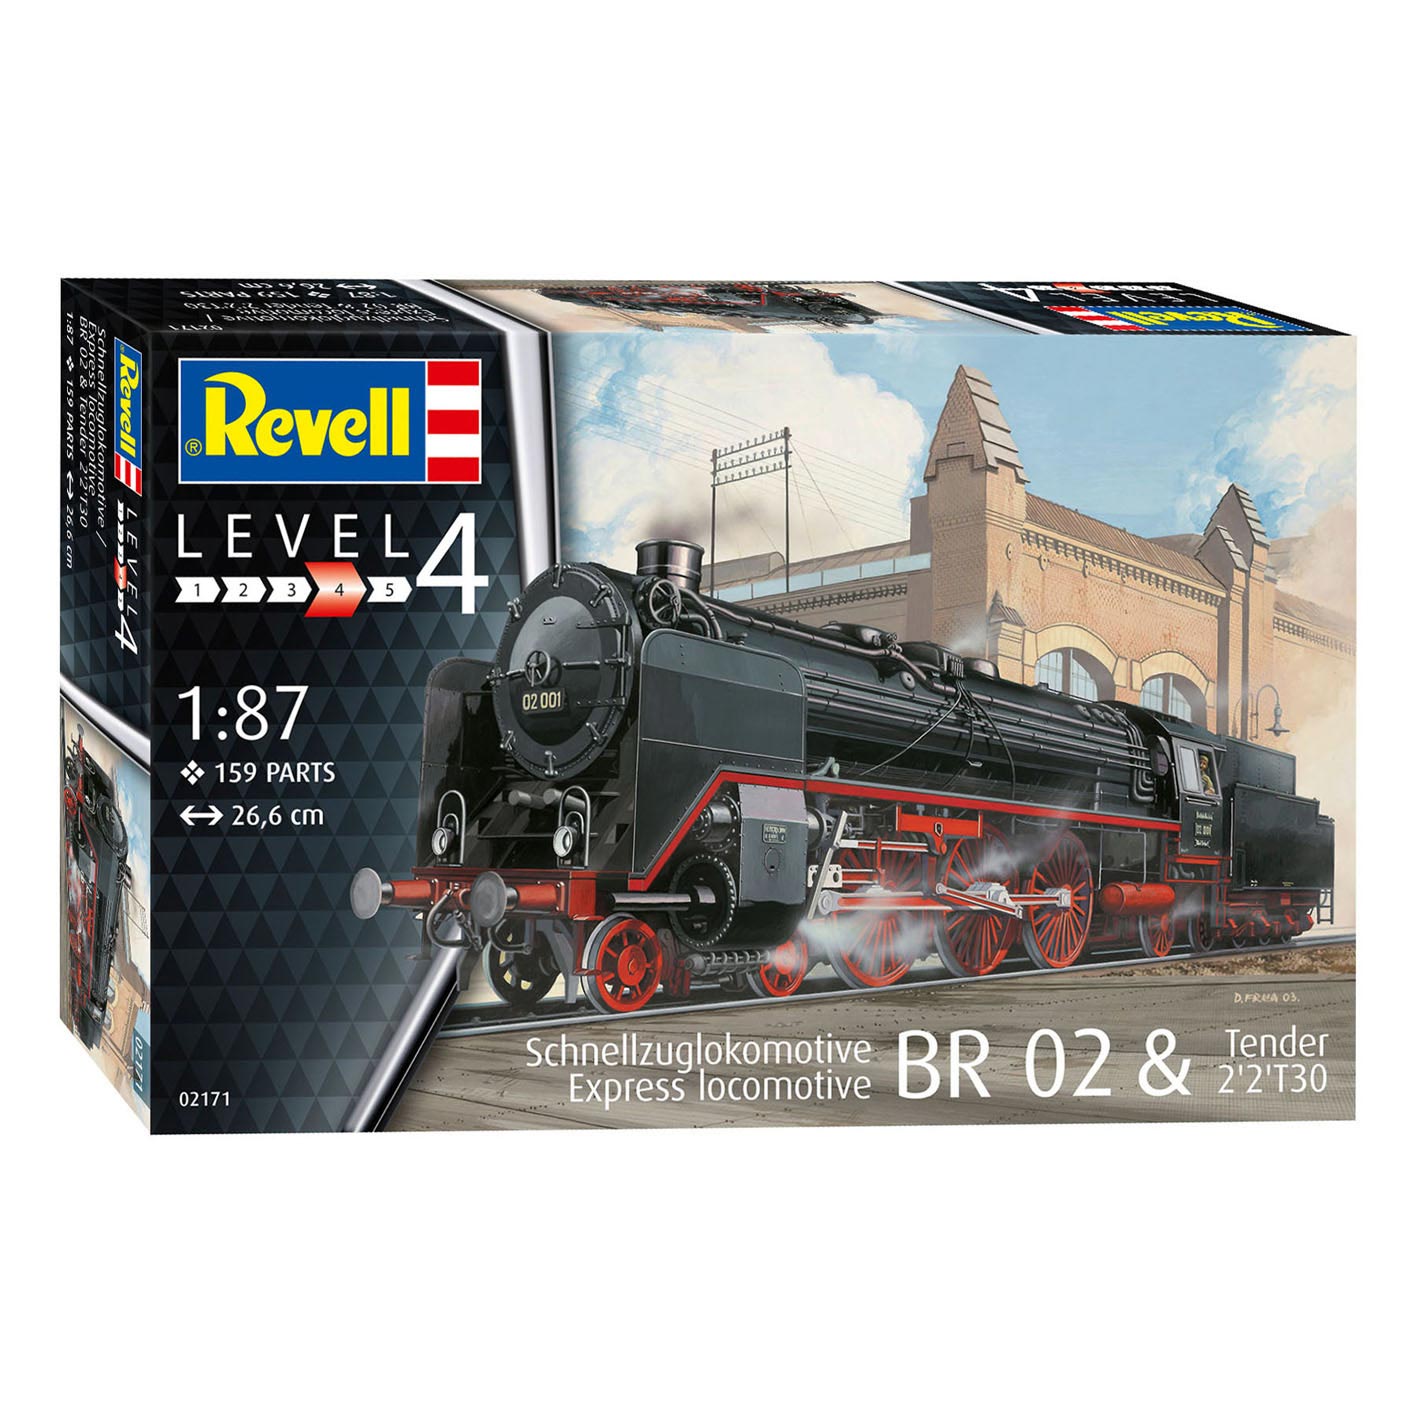 Revell Express Locomotive BR 02 Tender 2'2't30 Modelo Building